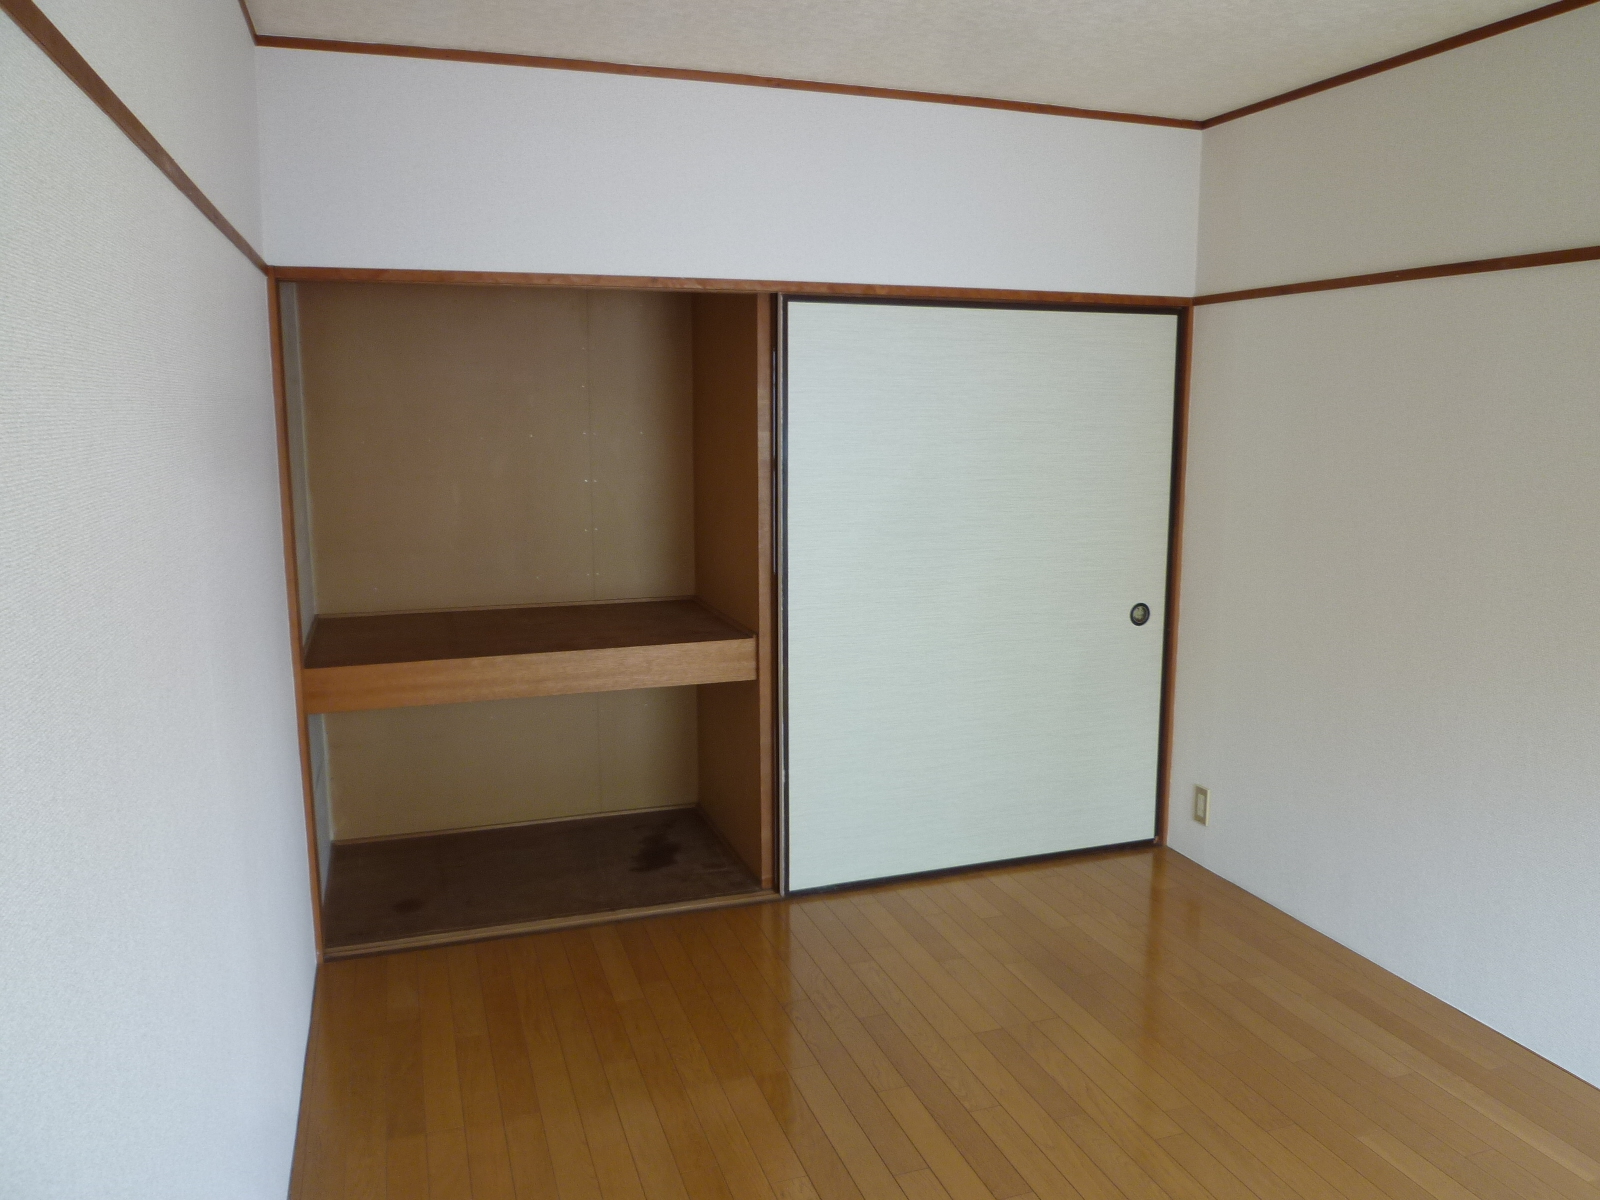 Living and room. Tatami some 6 Pledge amount is "6 Pledge".